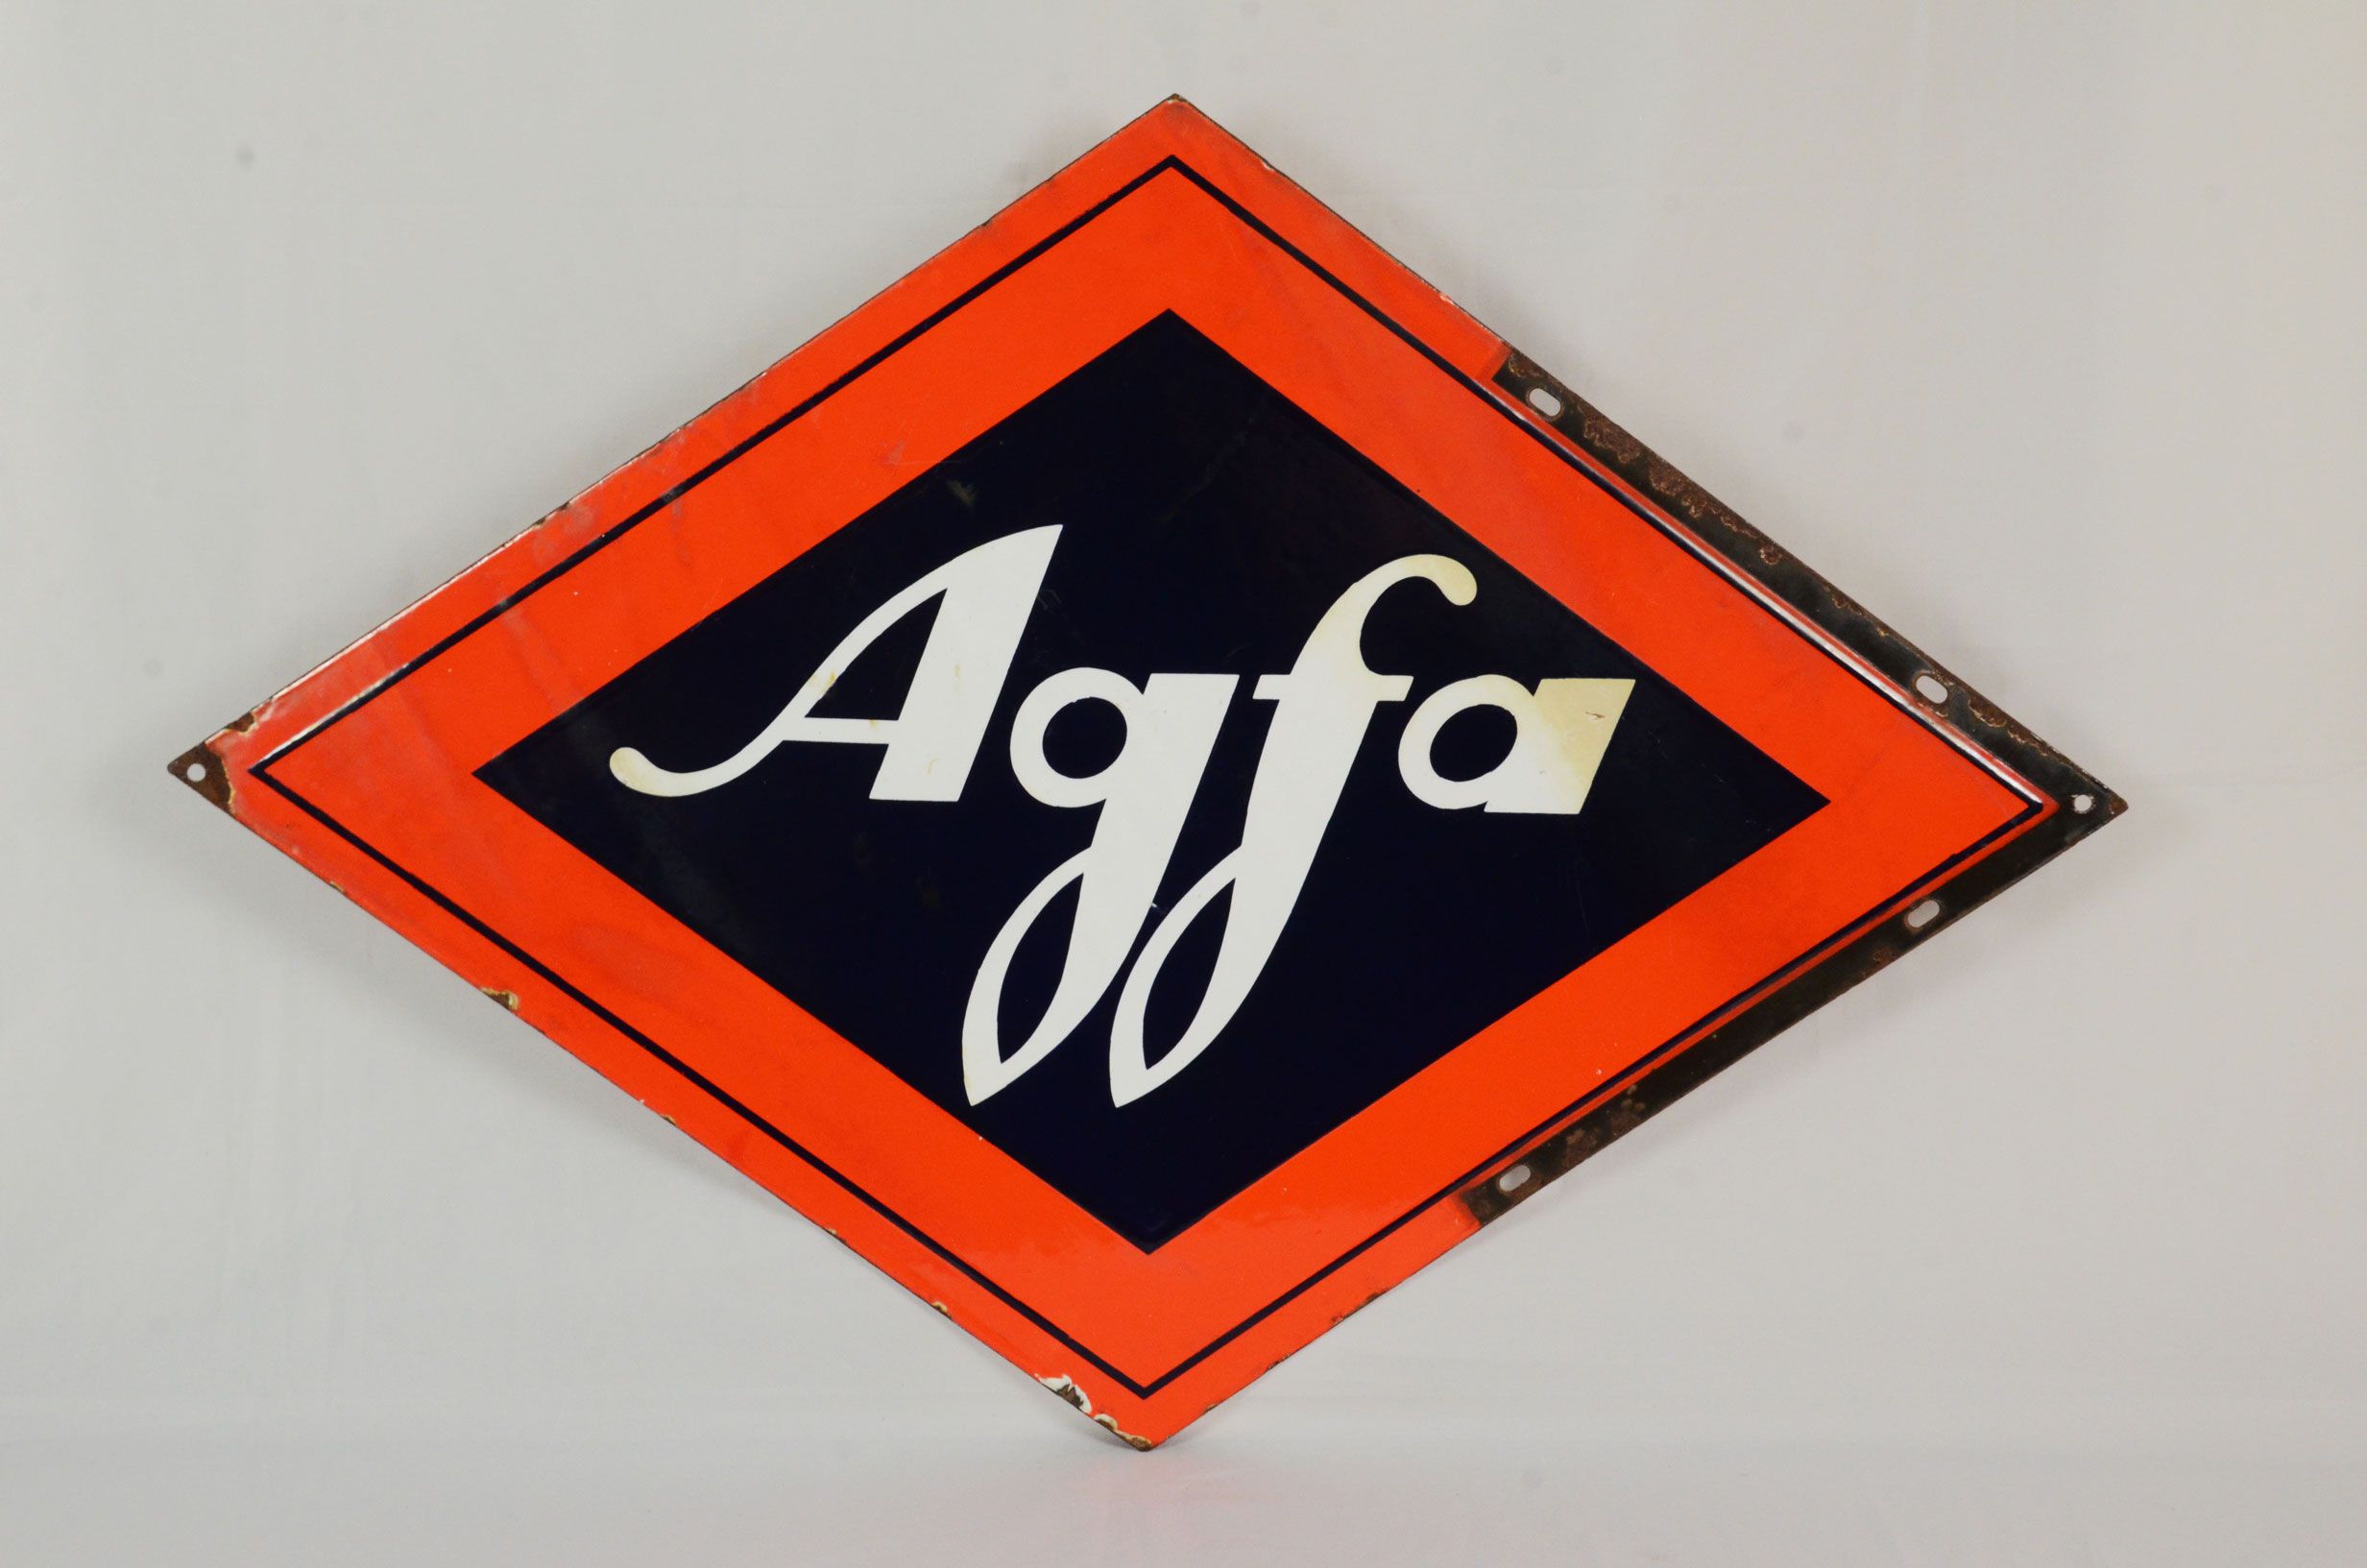 Two-sided enamel sign Agfa